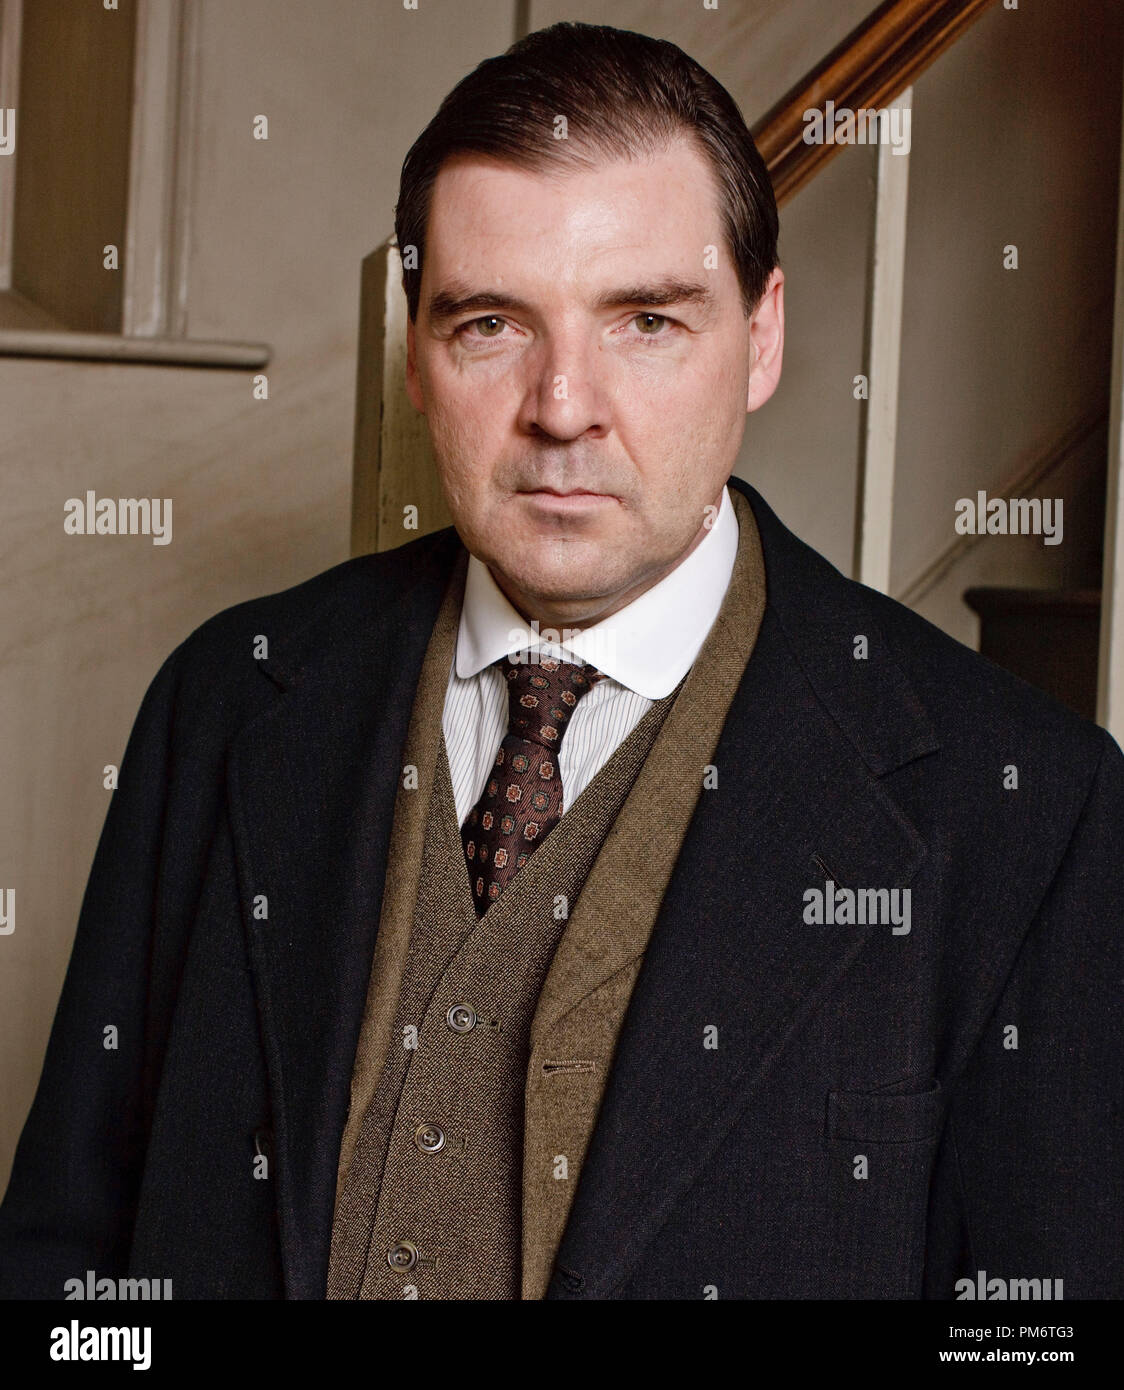 Brendan Coyle as Mr. Bates in Downton Abbey Stock Photo - Alamy